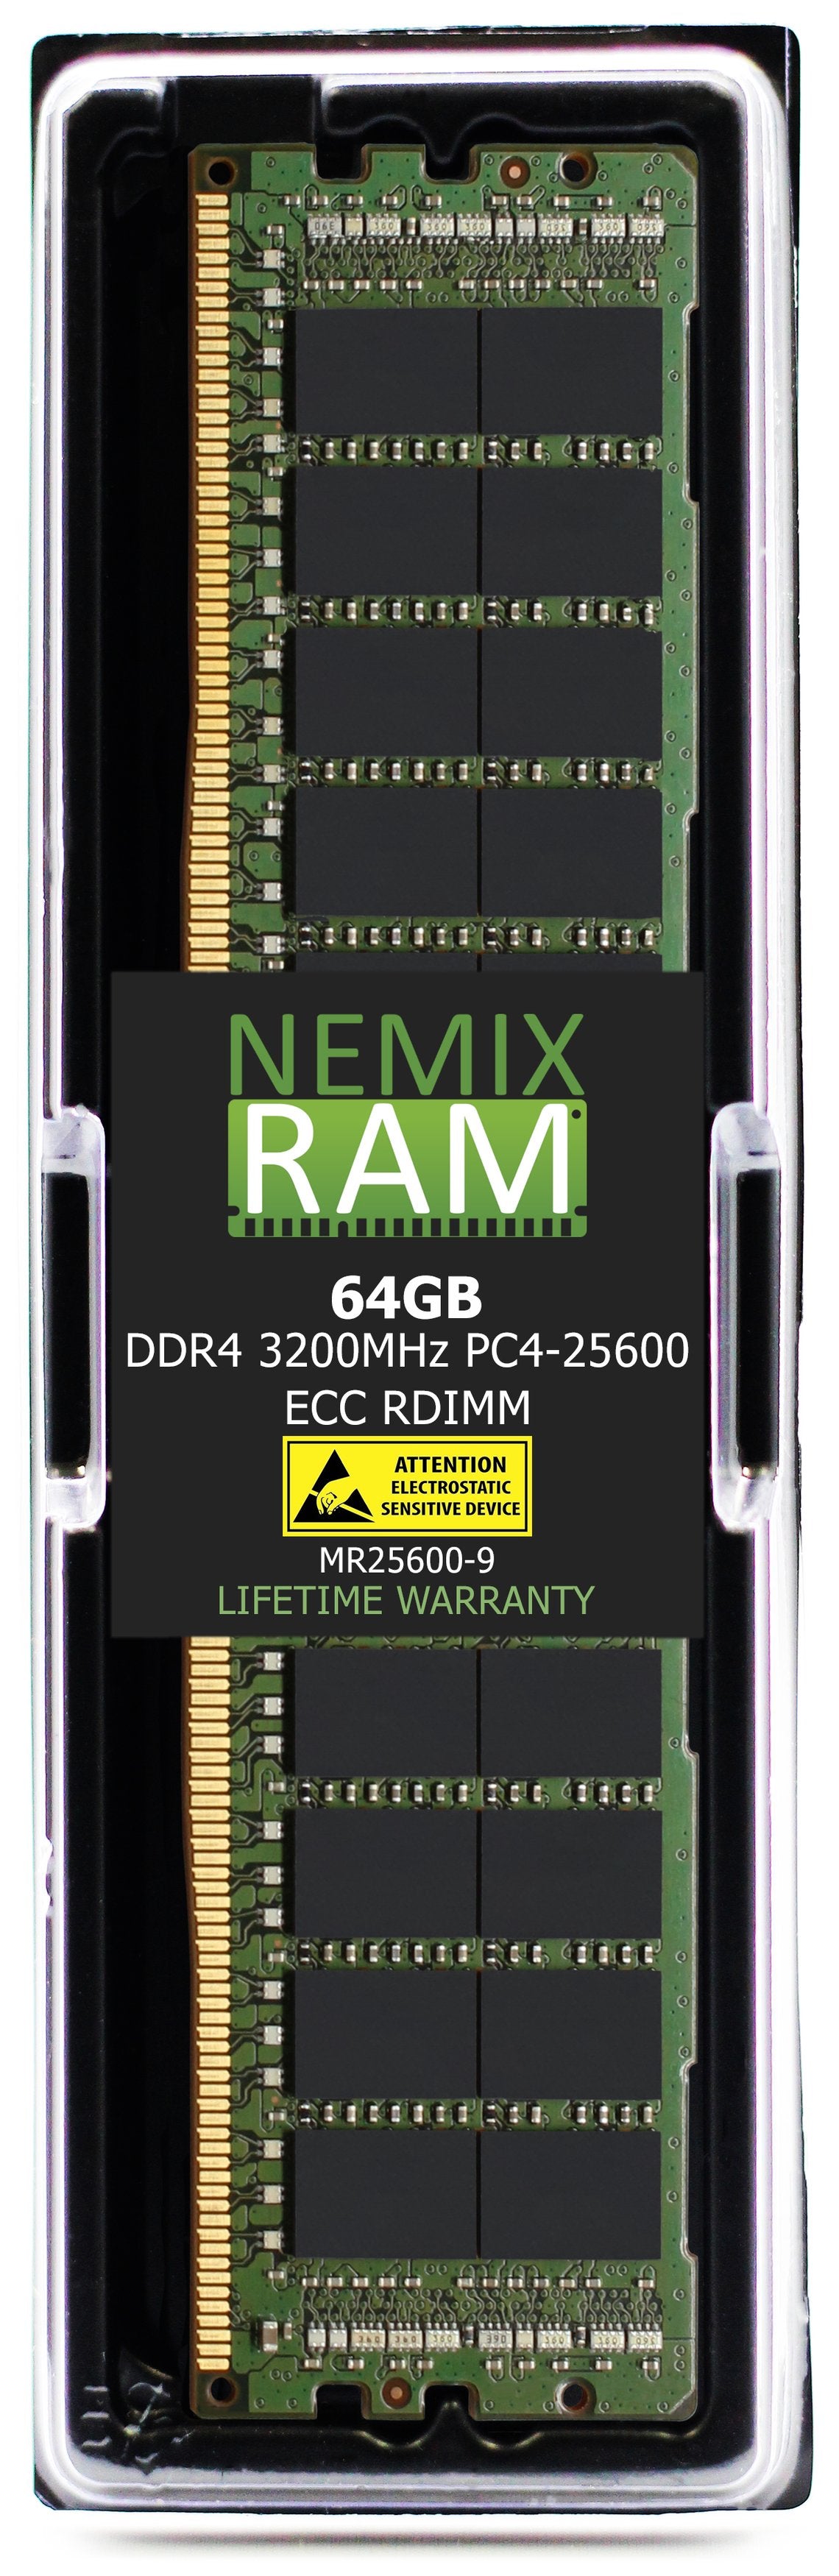 Hynix HMAA8GR7AJR4N-XN 64GB DDR4 3200MHZ PC4-25600 RDIMM Compatible Memory Module